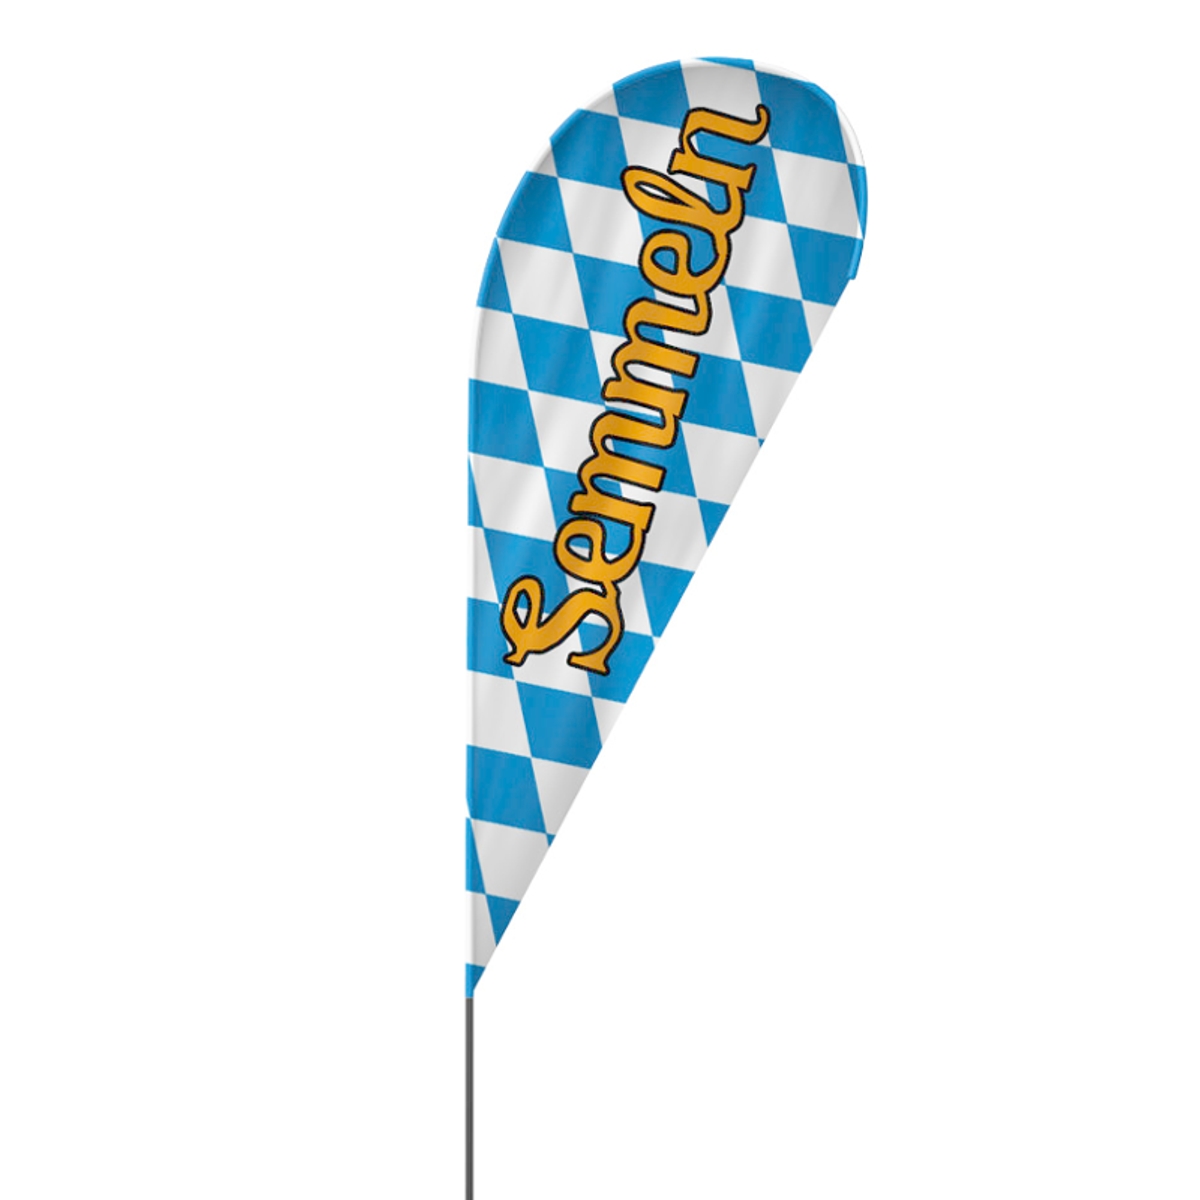 Drop | Semmeln, Oktoberfest Beachflag, blau weiß, verschiedene Größen, V1